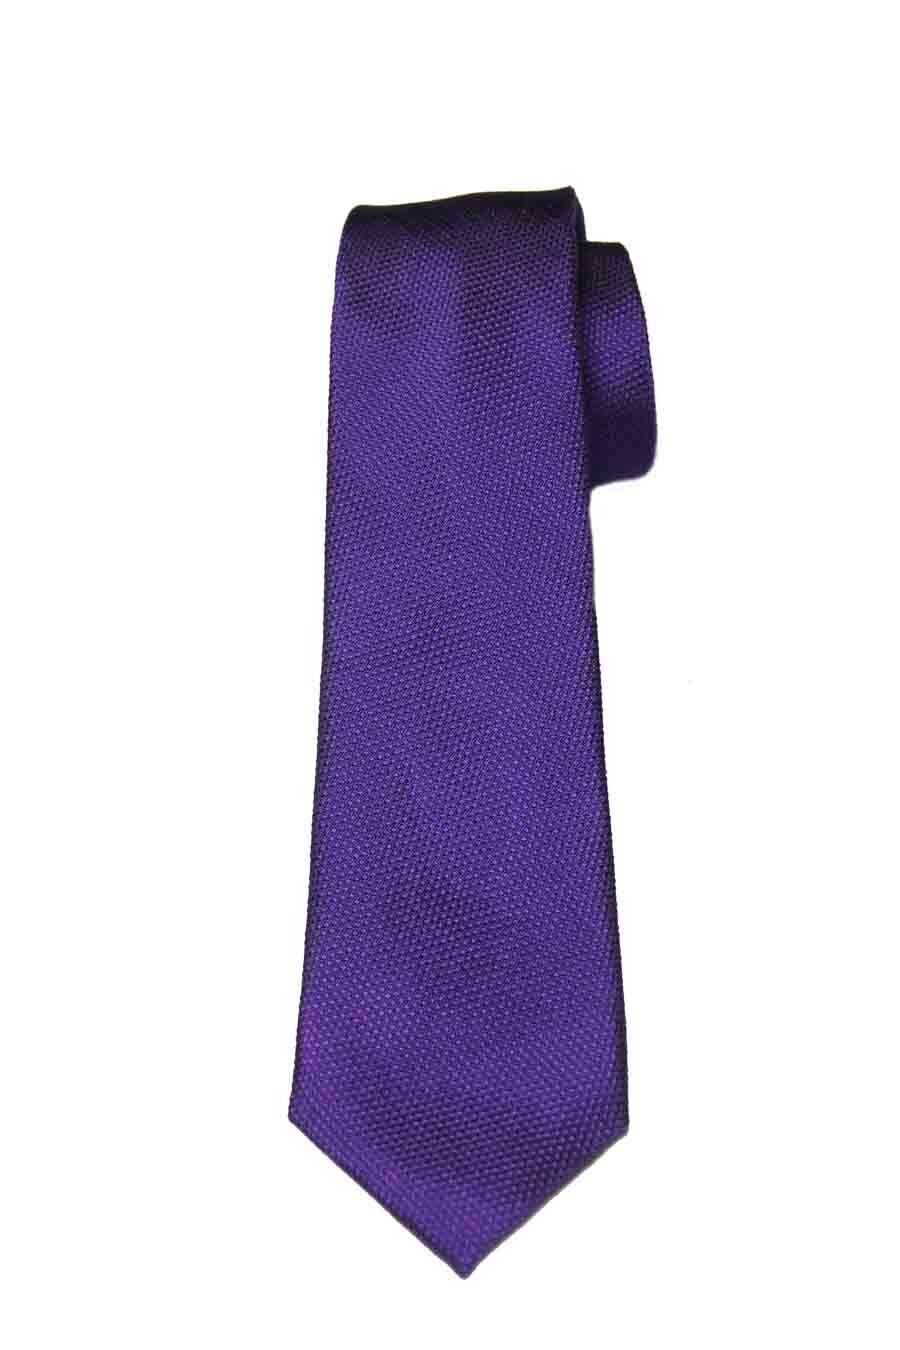 Paul Costelloe London Silk Tie Purple Textured Men's Long Narrow